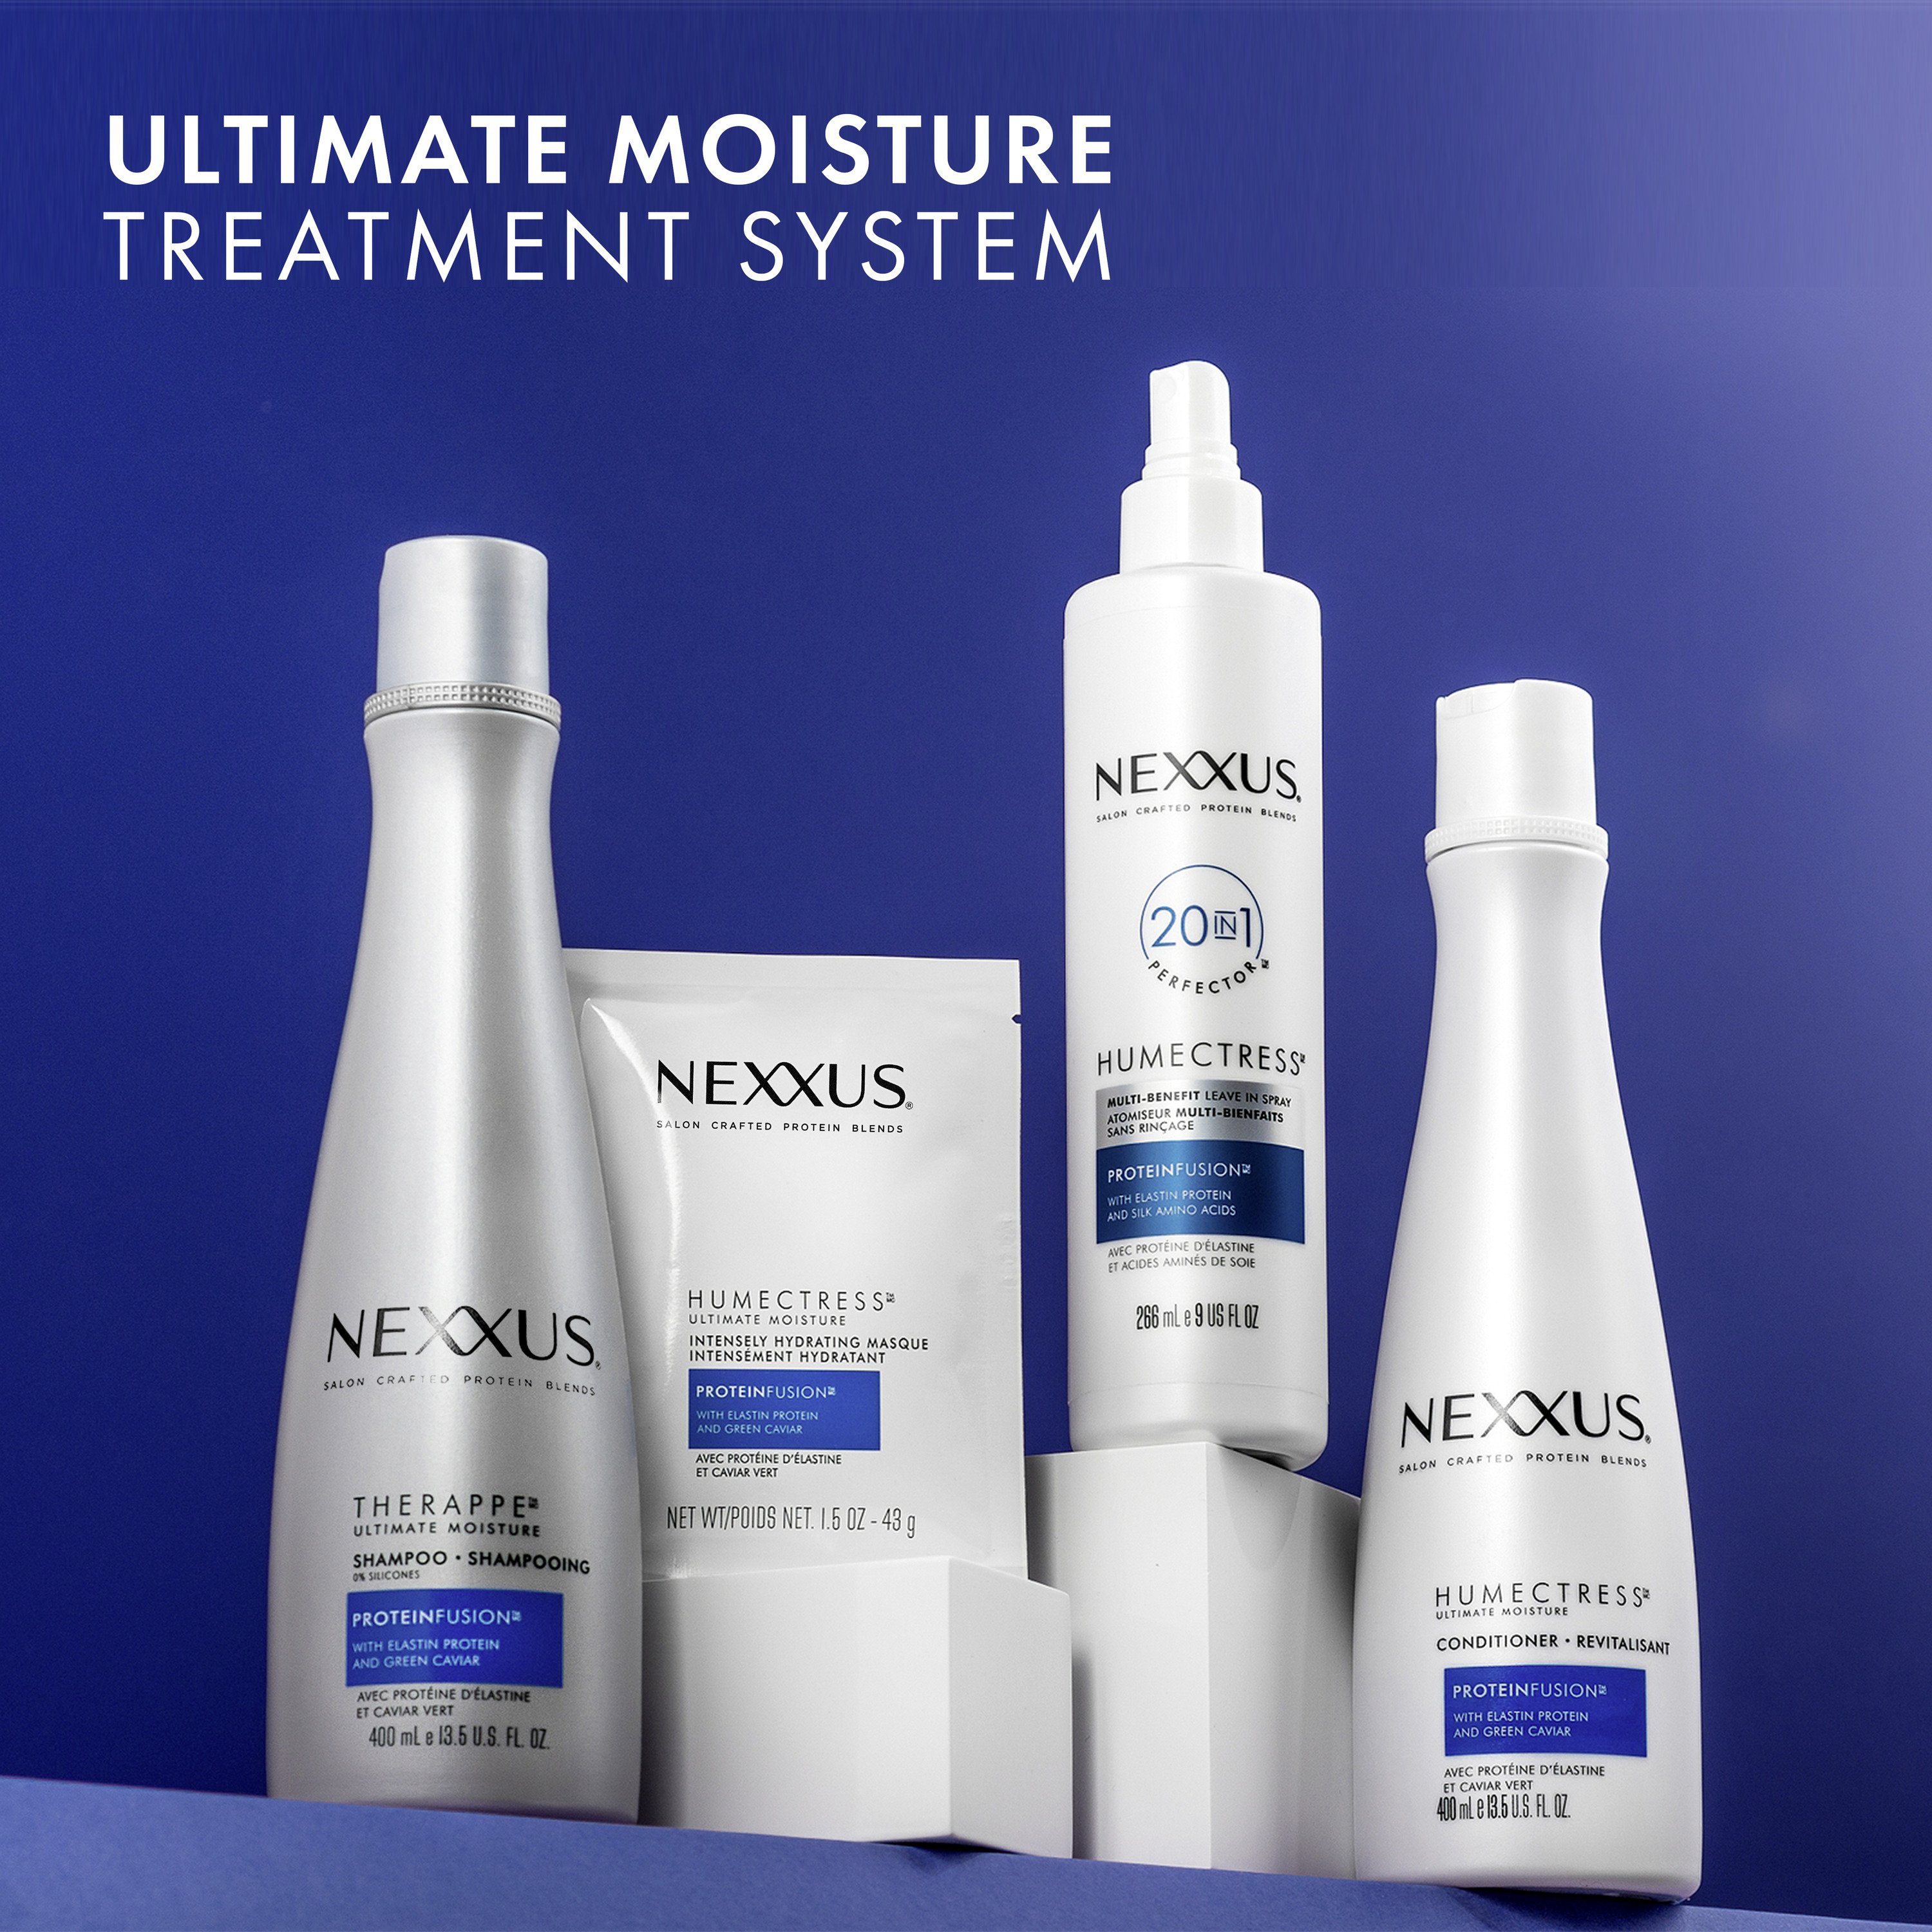 Nexxus Clean & Pure Clarifying Shampoo - Shop Shampoo & Conditioner at H-E-B